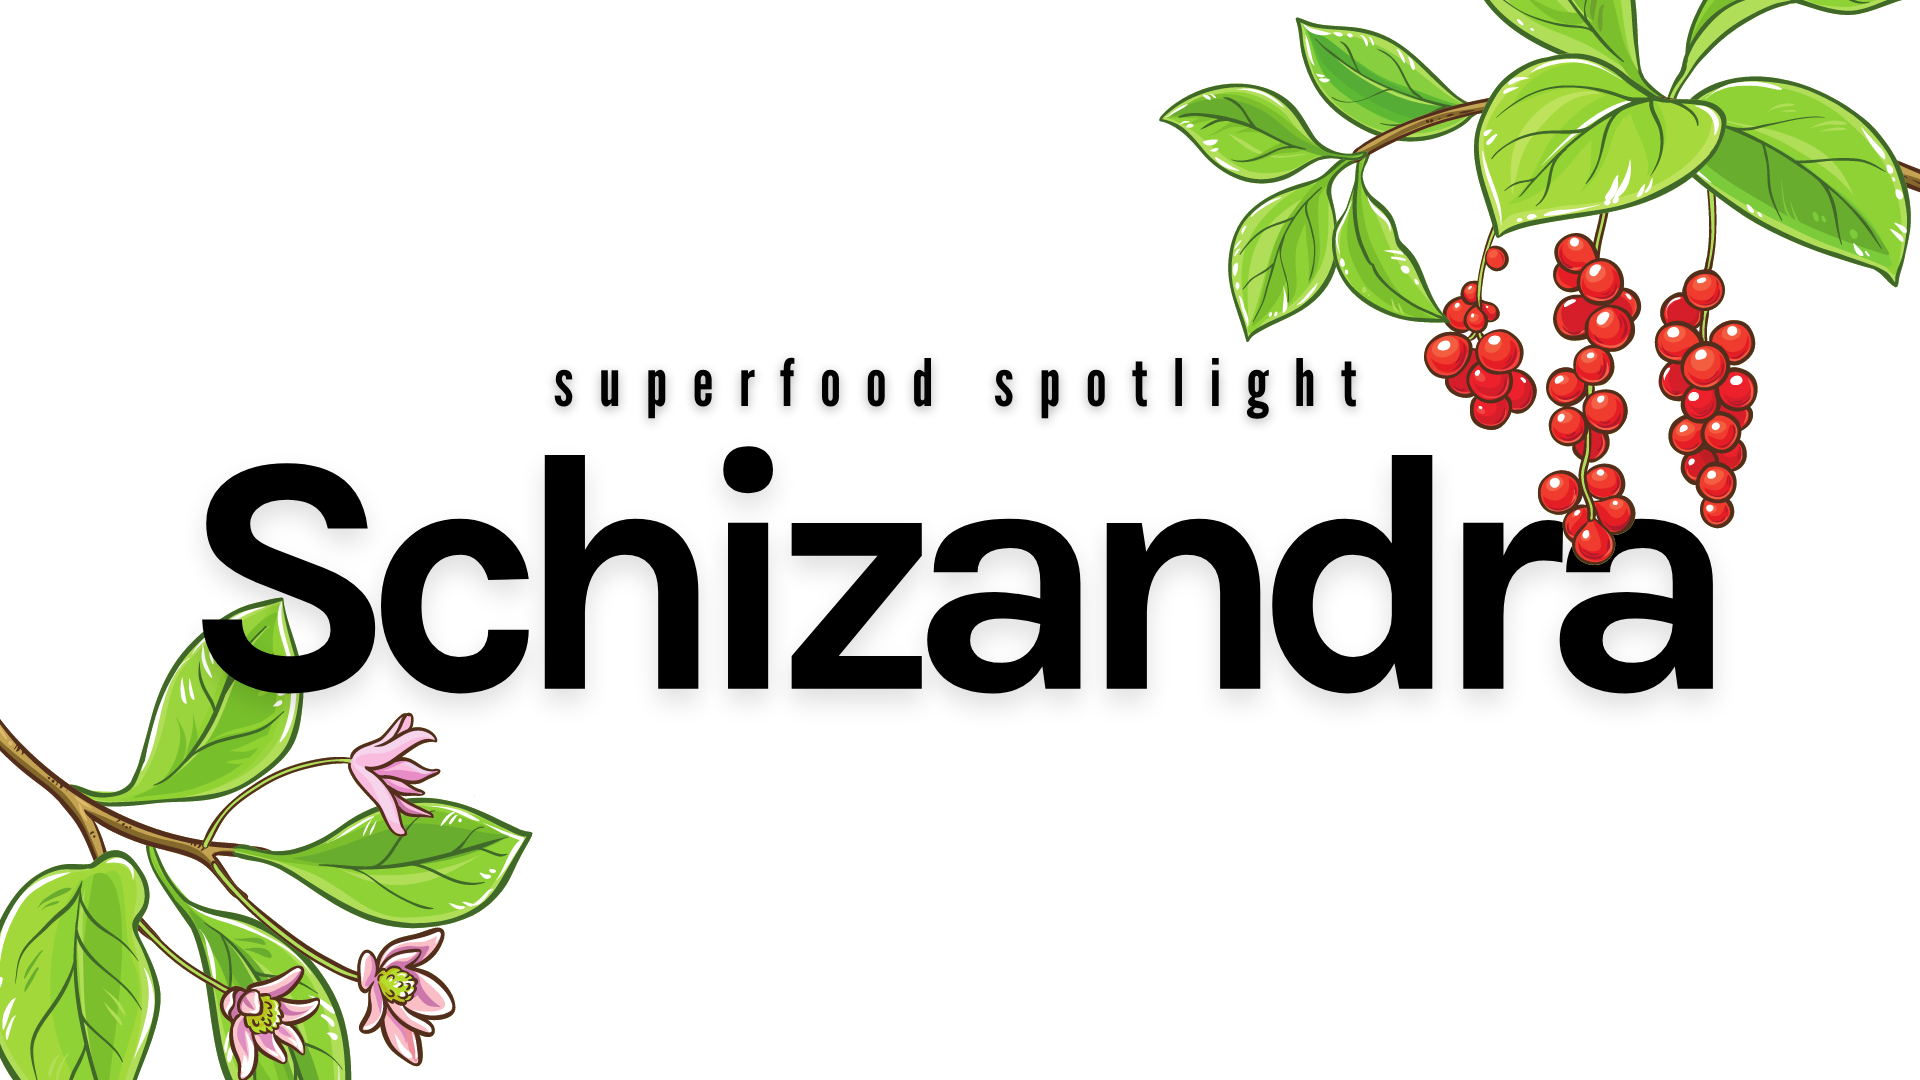 Superfood Spotlight: Schizandra